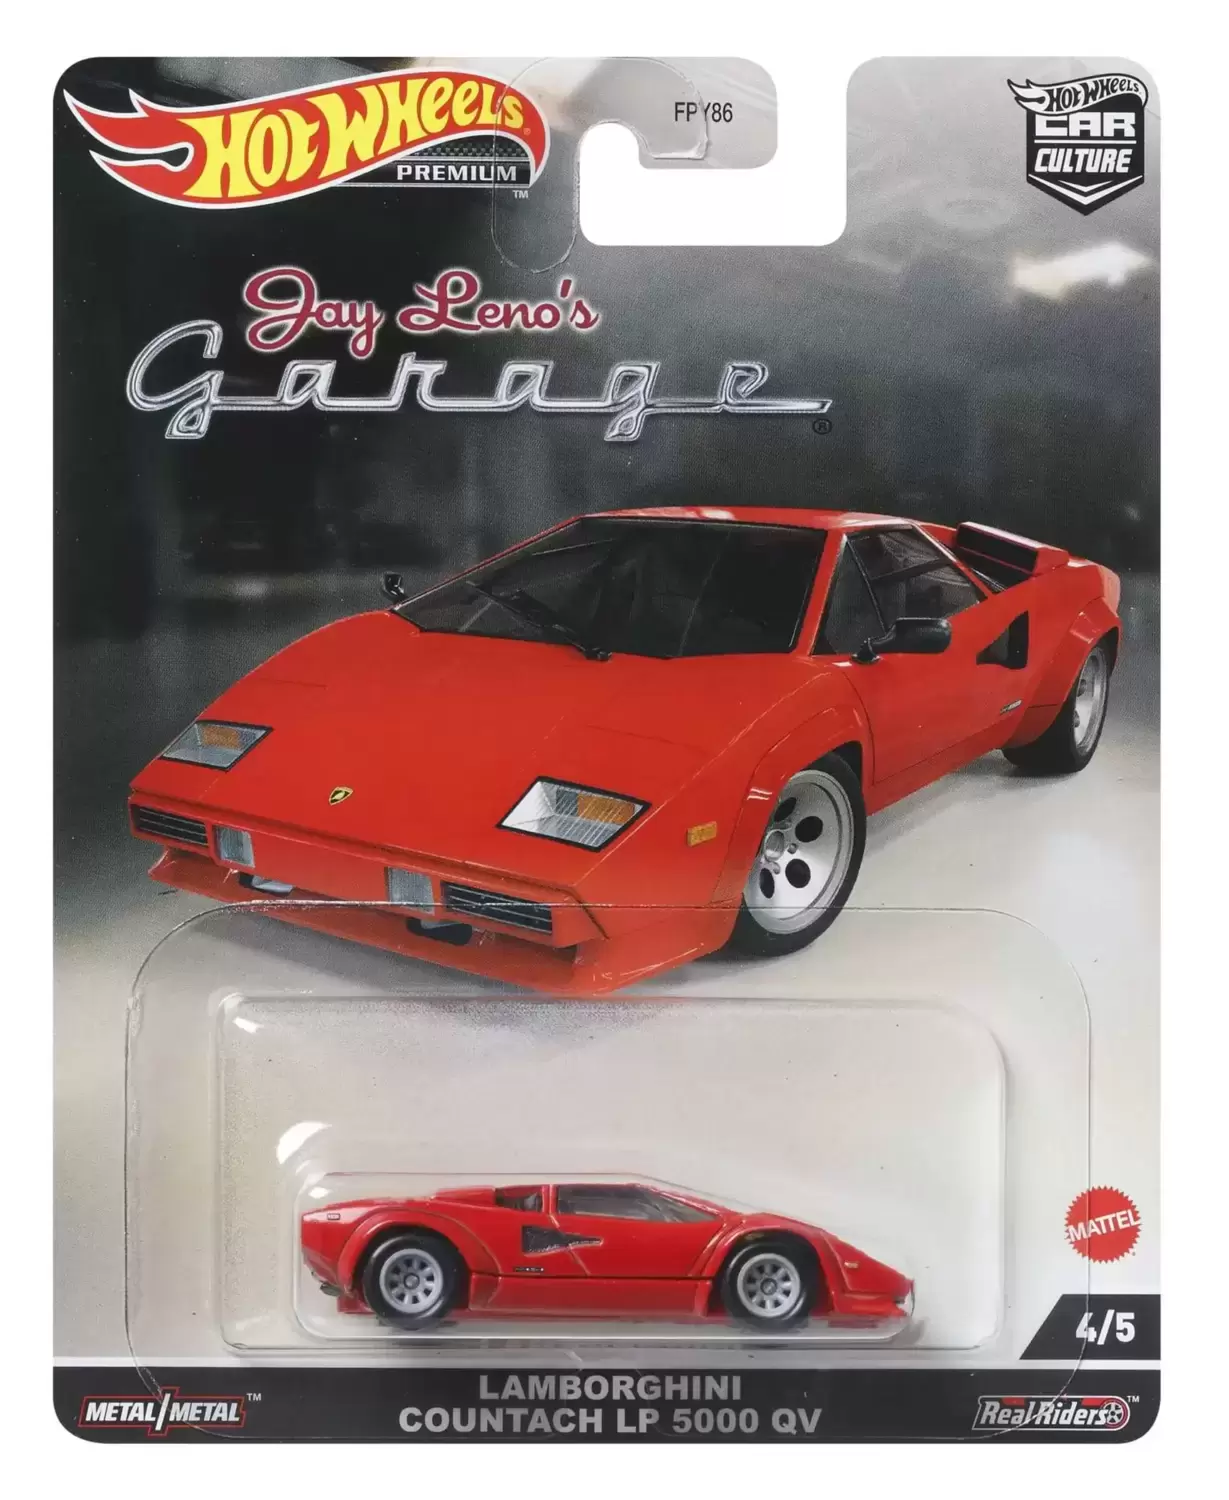 Hot Wheels - Car Culture - Jay Leno\'s Garage - Lamborghini Countach LP 5000 QV